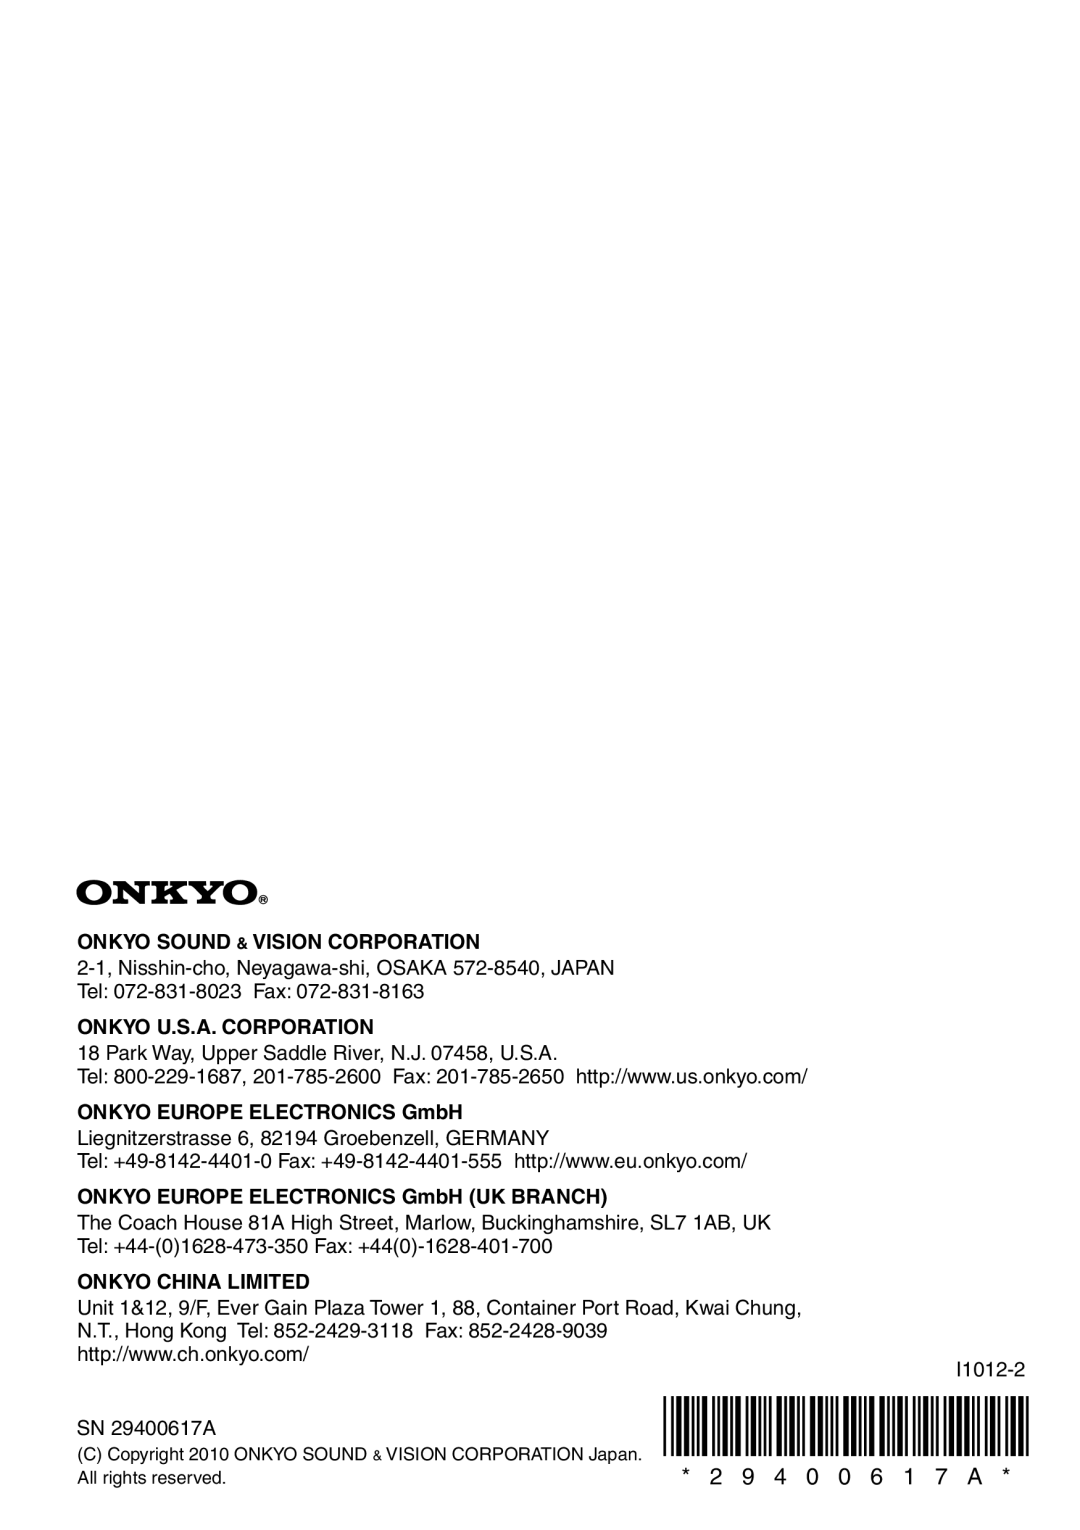 Onkyo DS-A4 2 9 4 0 0 6 1 7 A, Onkyo Sound & Vision Corporation, Onkyo U.S.A. Corporation, ONKYO EUROPE ELECTRONICS GmbH 